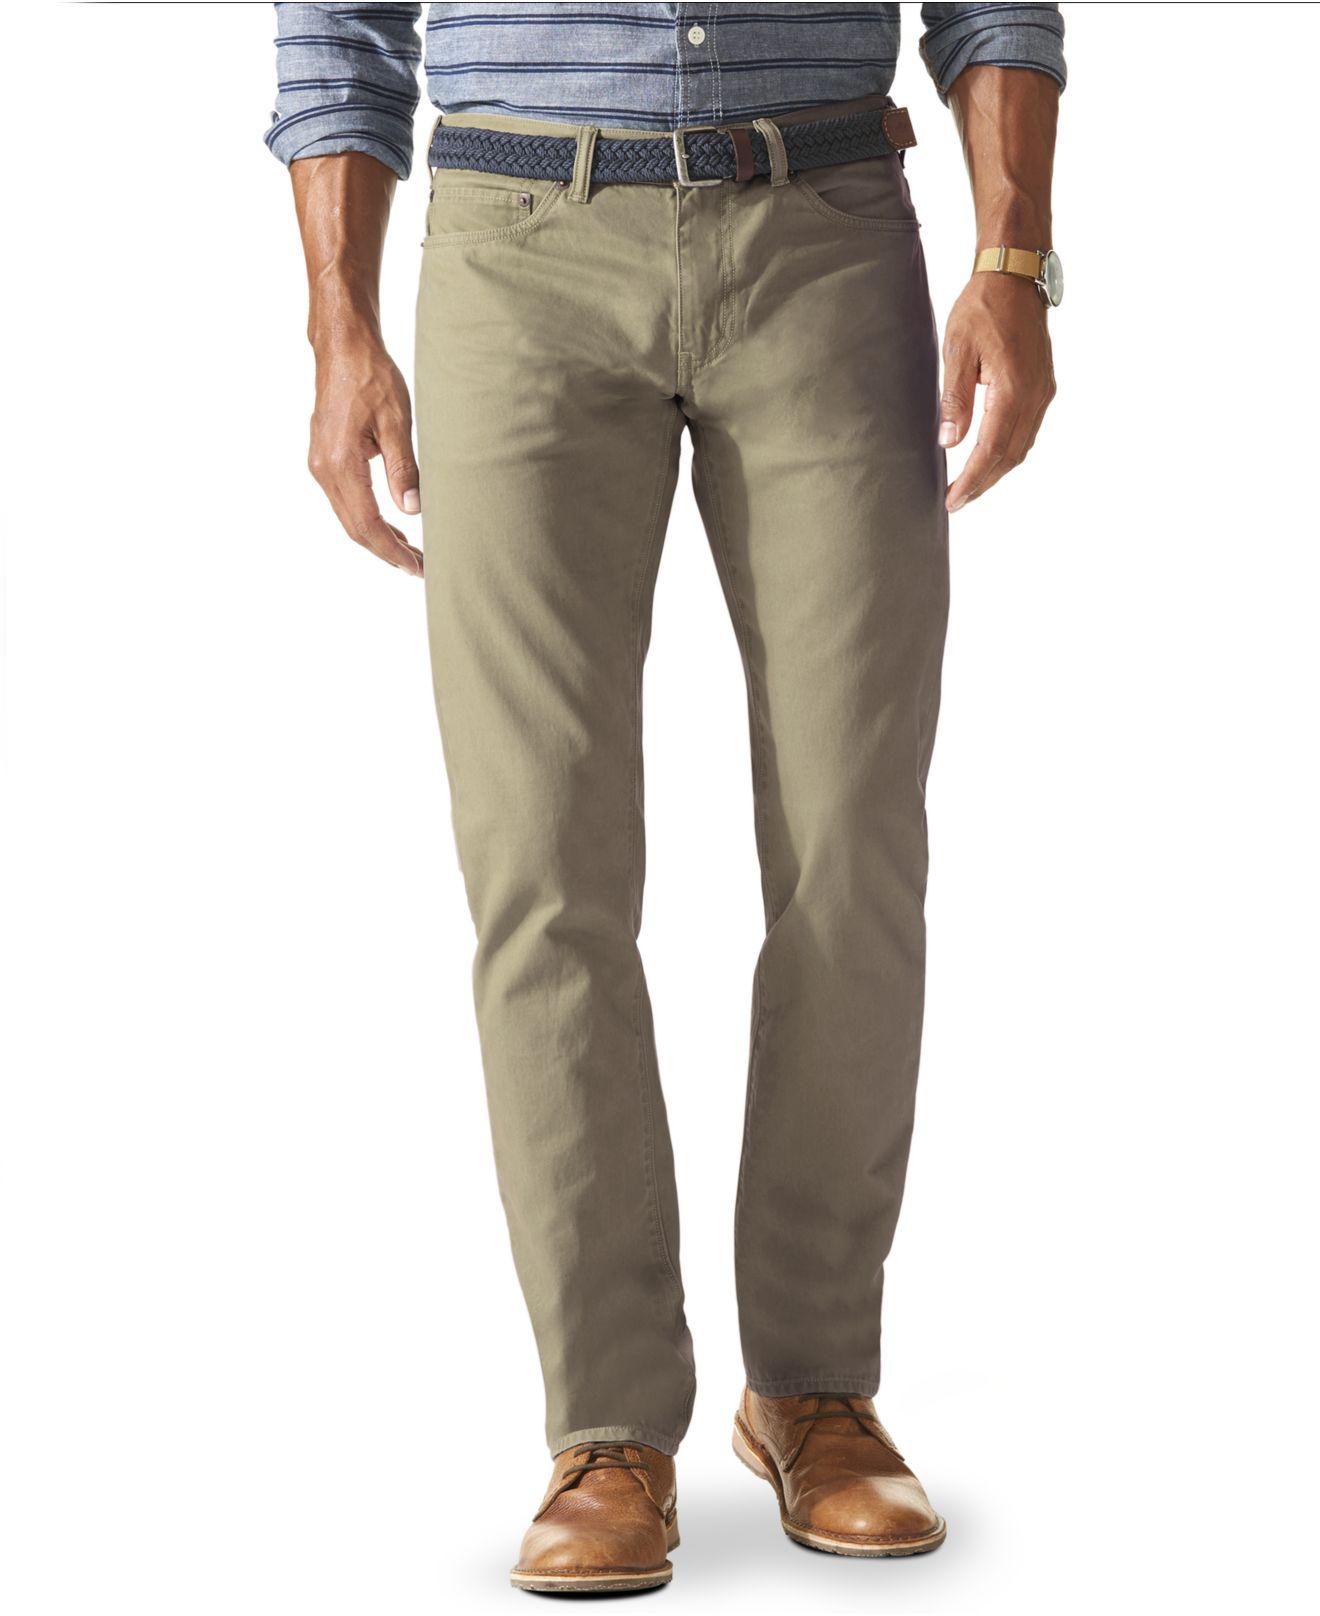 Dockers Slim-fit Flat-front Jean Cut Khaki Pants in Natural for Men - Lyst